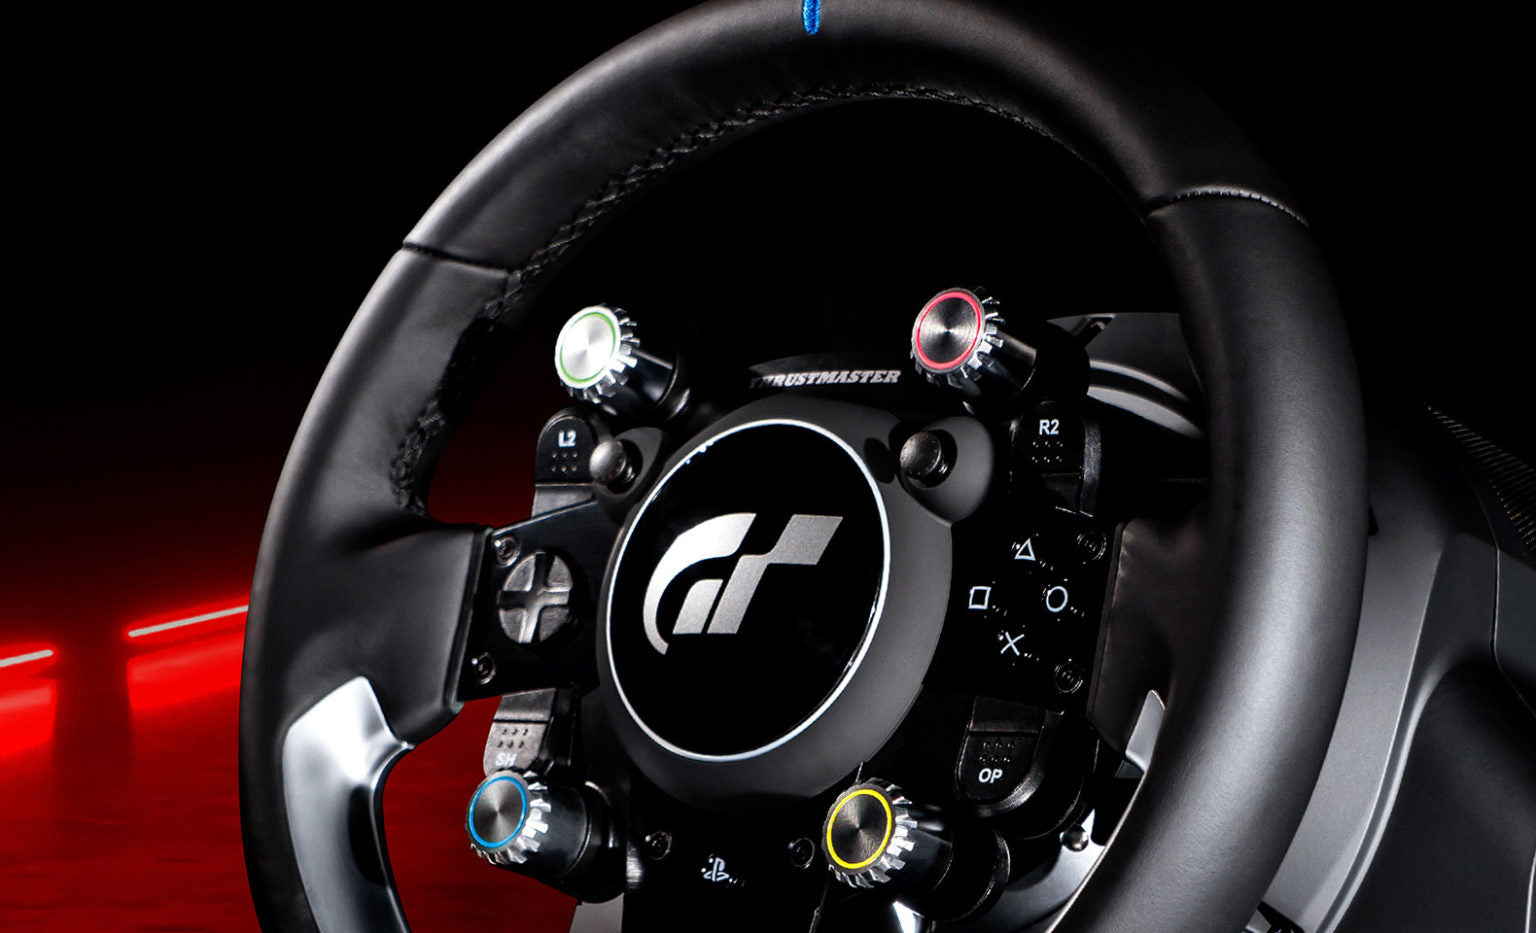 Thrustmaster T-GT II Force Feedback Racing Wheel Set – Pit Lane Sim Racing